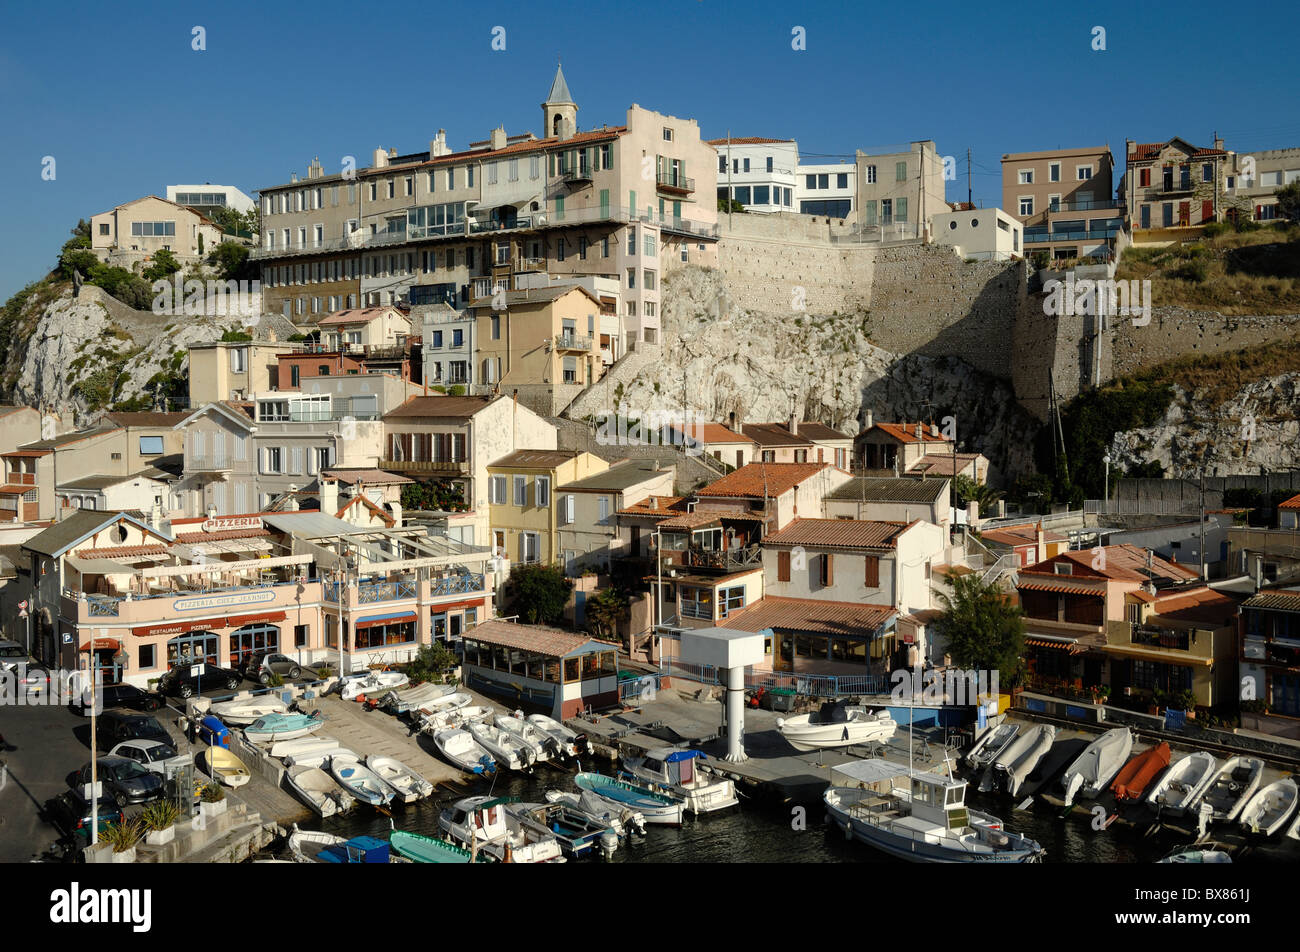 Vallon des Auffes y pequeño puerto pesquero, a lo largo de la Corniche, Marsella o Marsella, Provenza, Francia Foto de stock